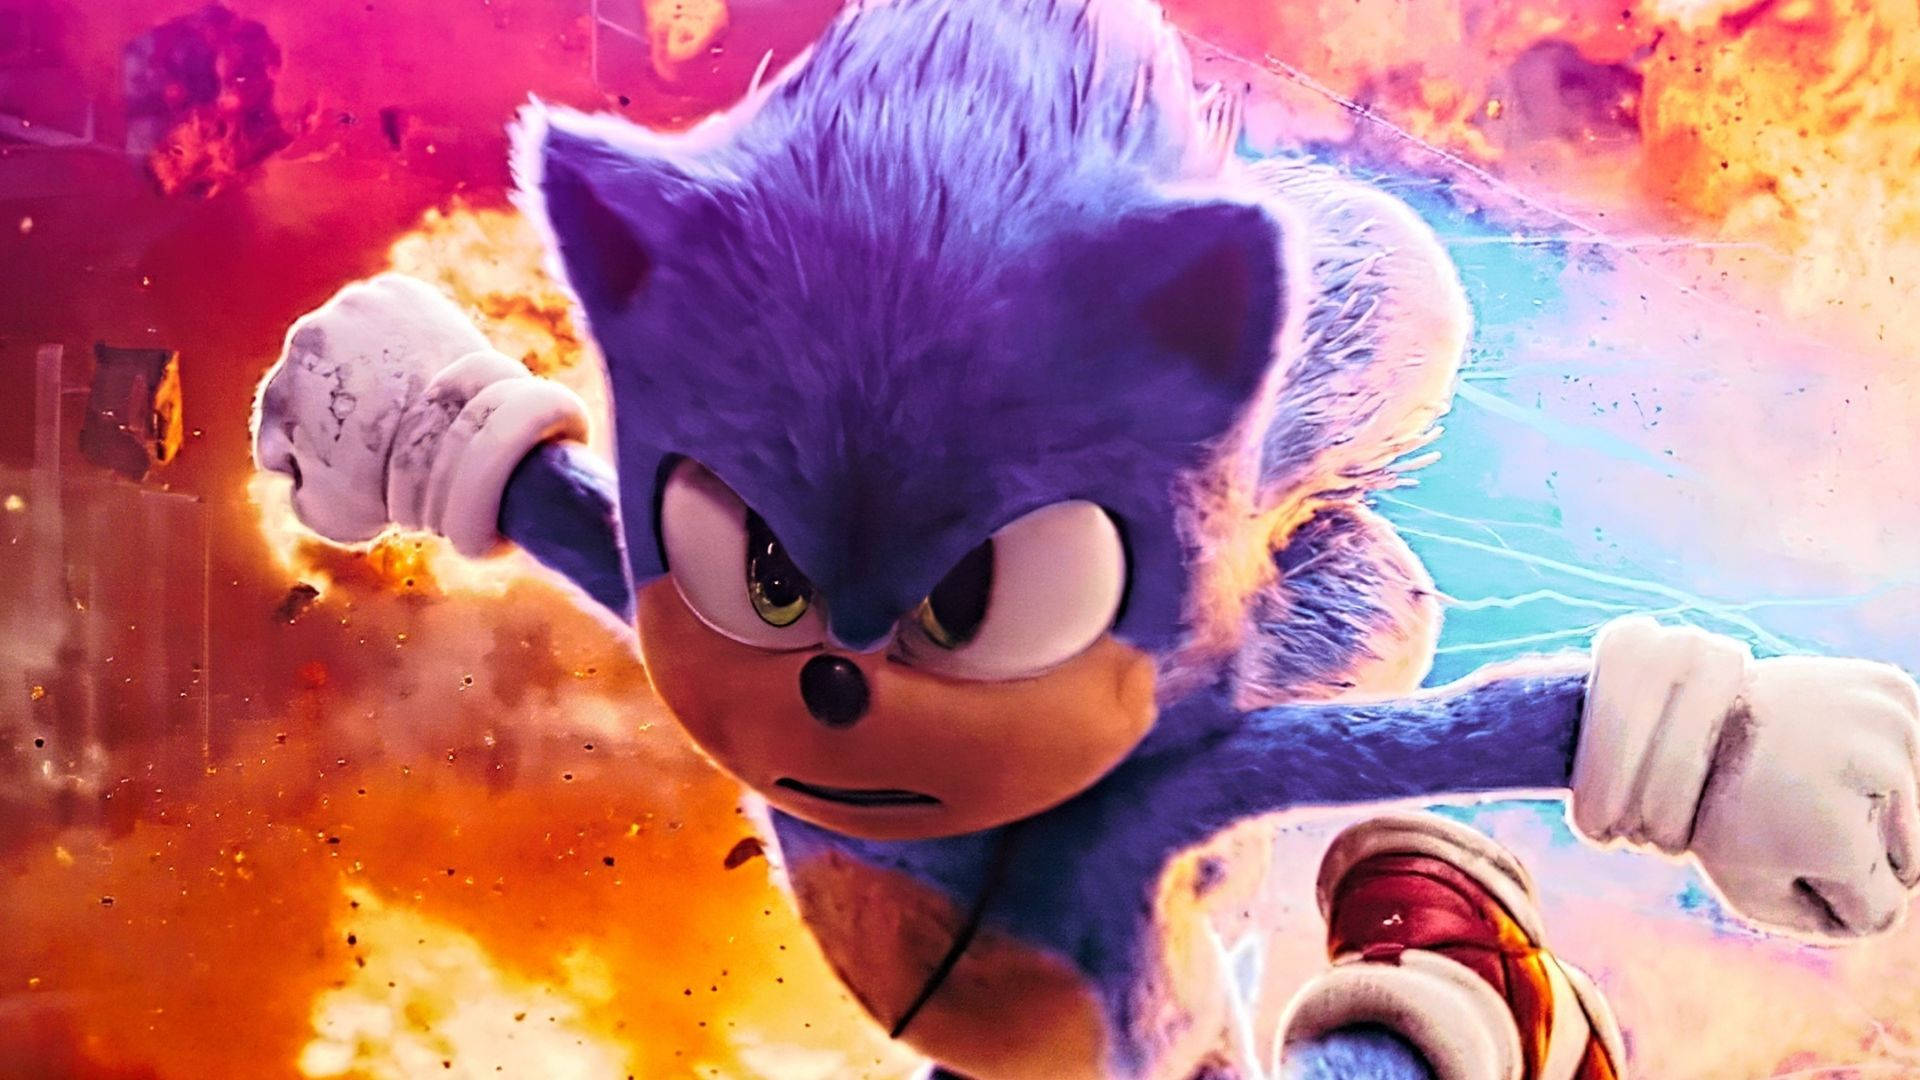 Free Sonic The Hedgehog Wallpaper Downloads, Sonic The Hedgehog Wallpaper for FREE